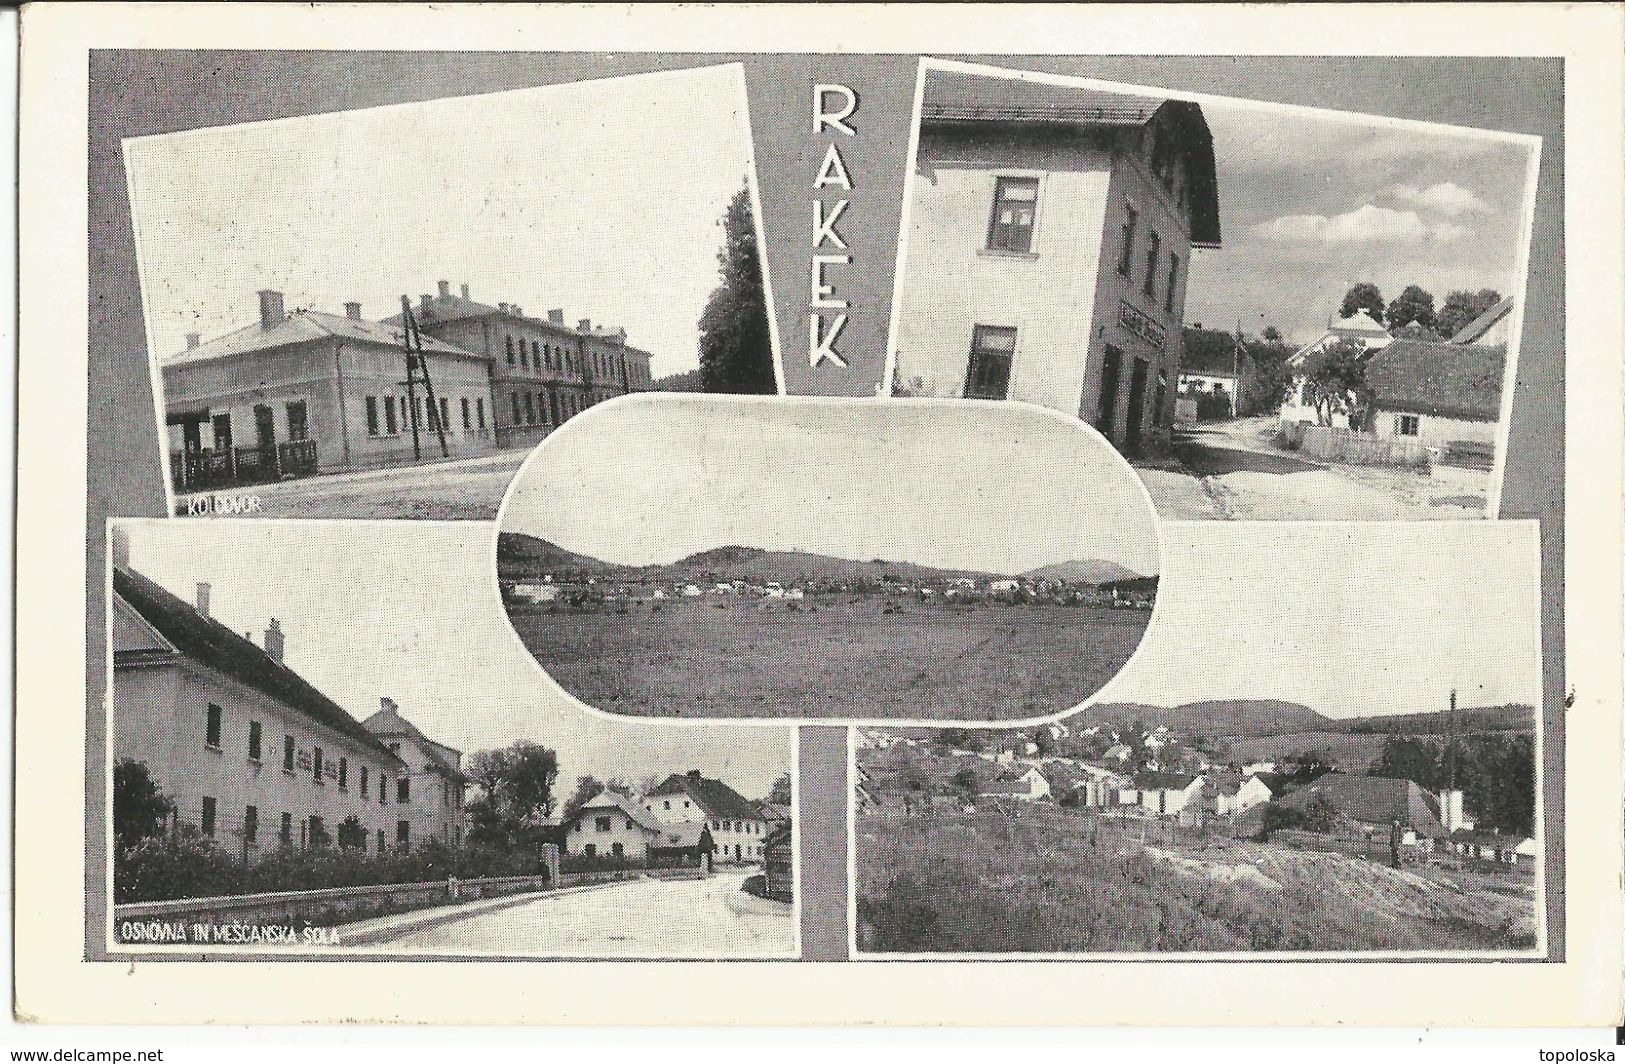 RAKEK - Slovenia